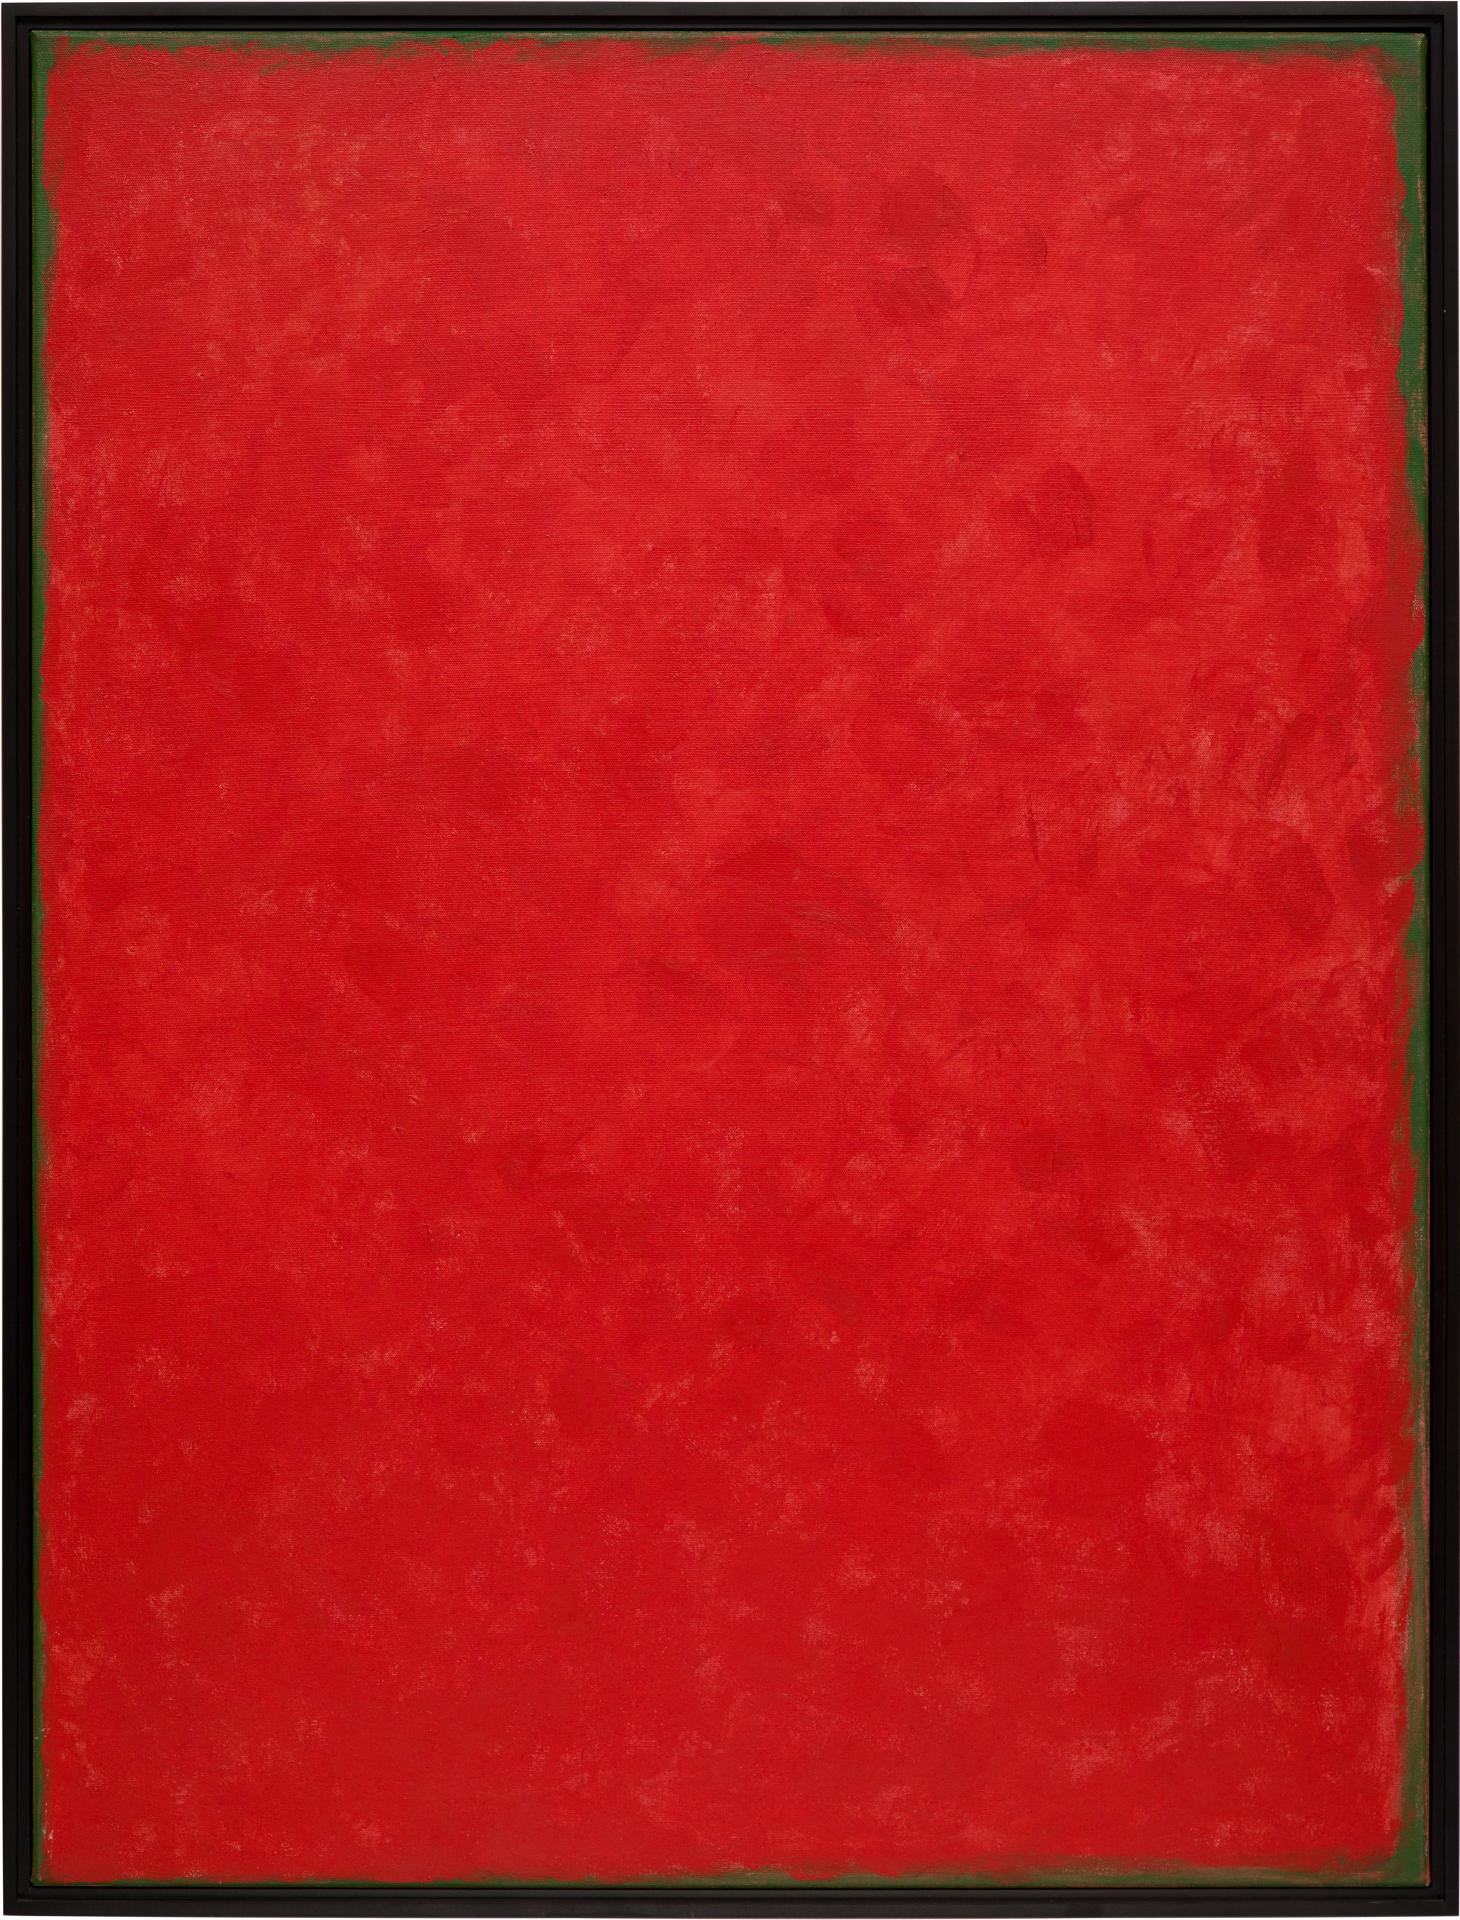 Françoise Sullivan (1925) - Red Glow